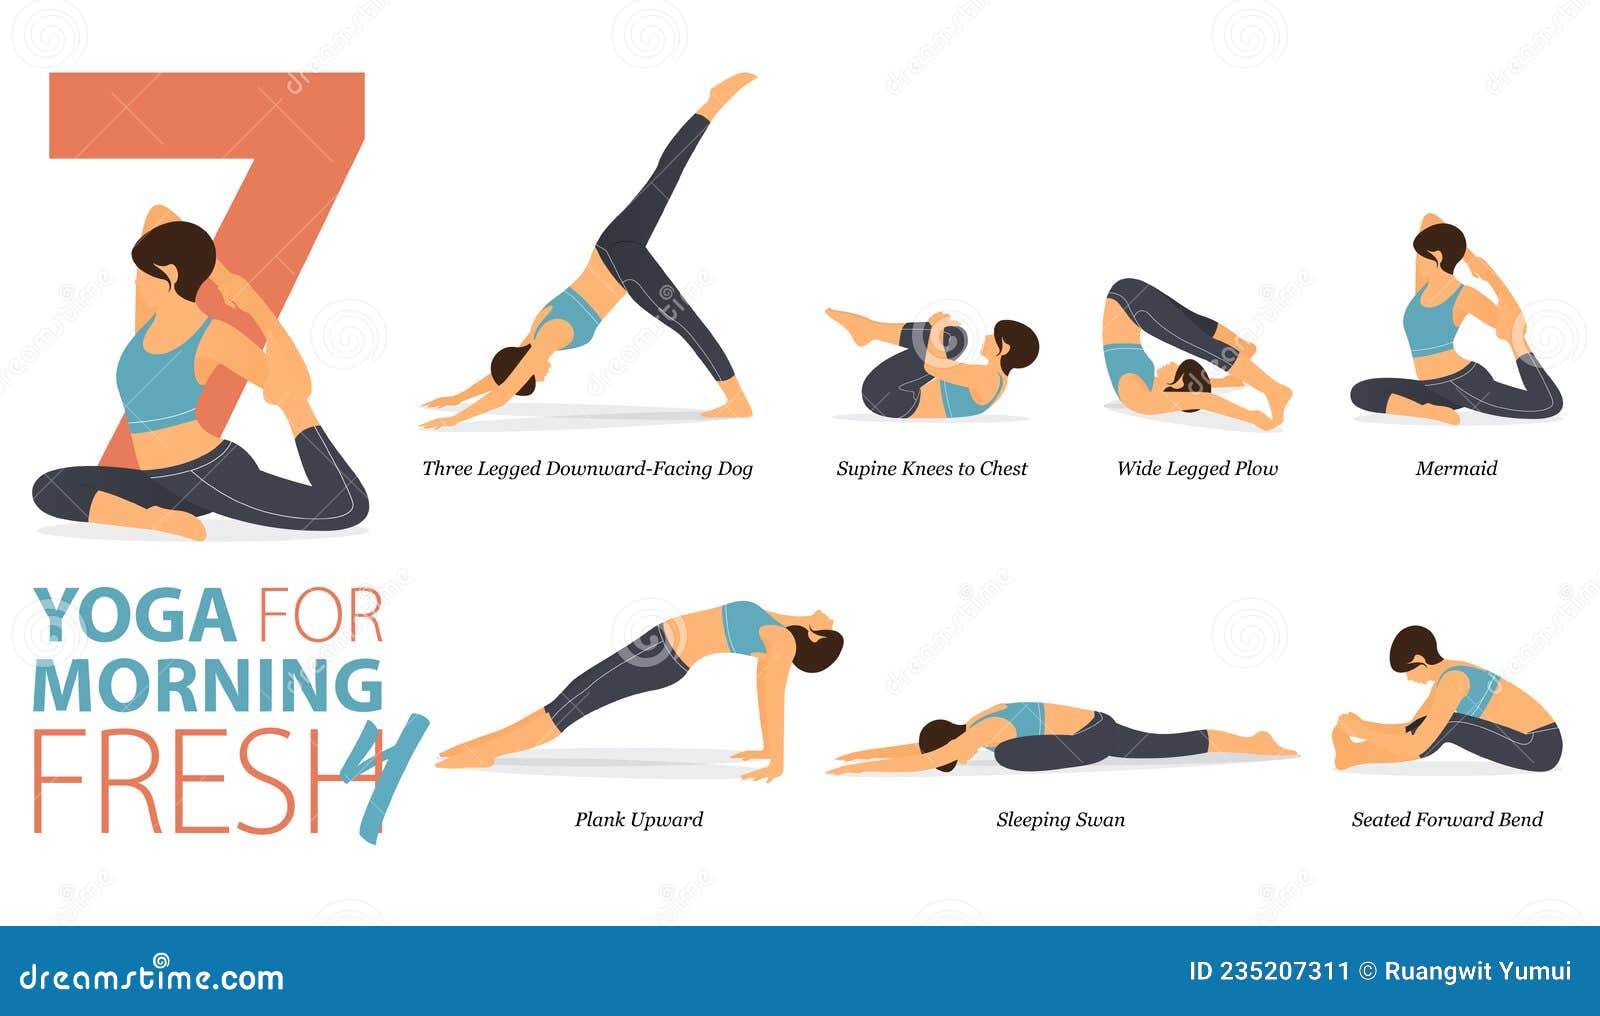 Easy Yoga Poses for Beginners [Infographic] - Infostache